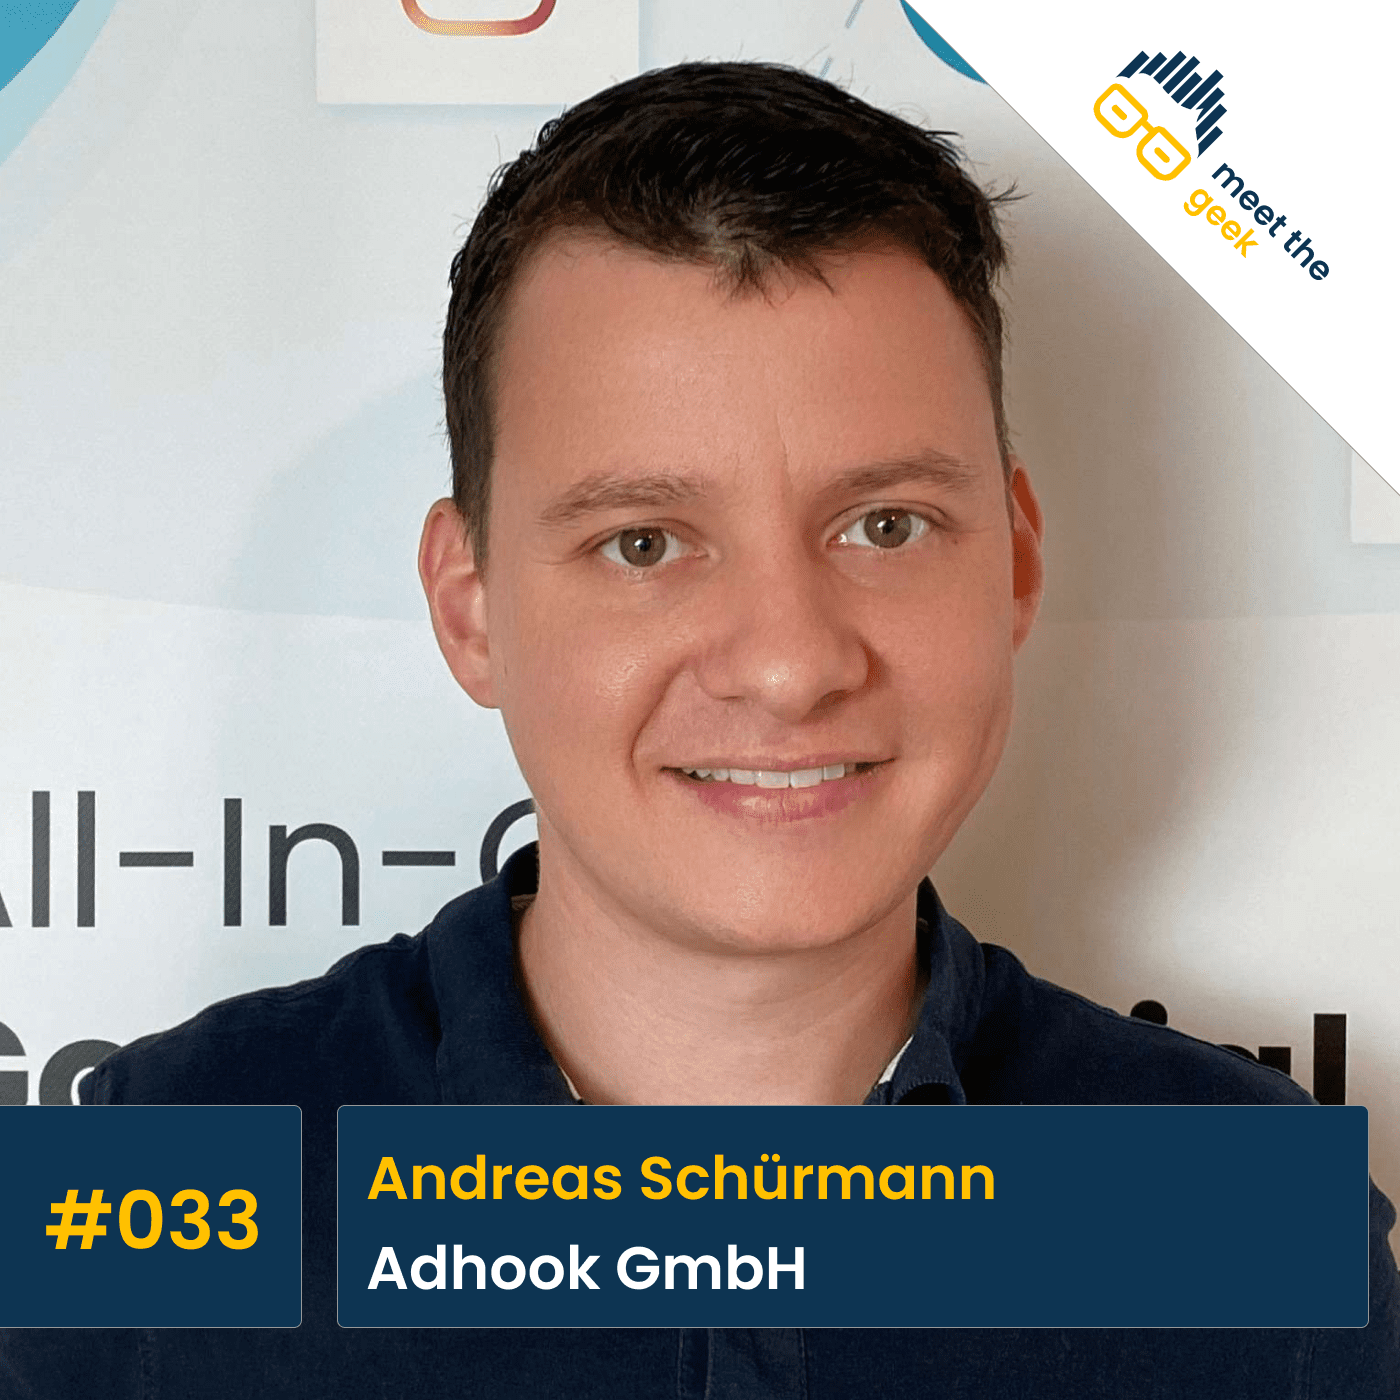 #033 Andreas Schürmann, Adhook GmbH